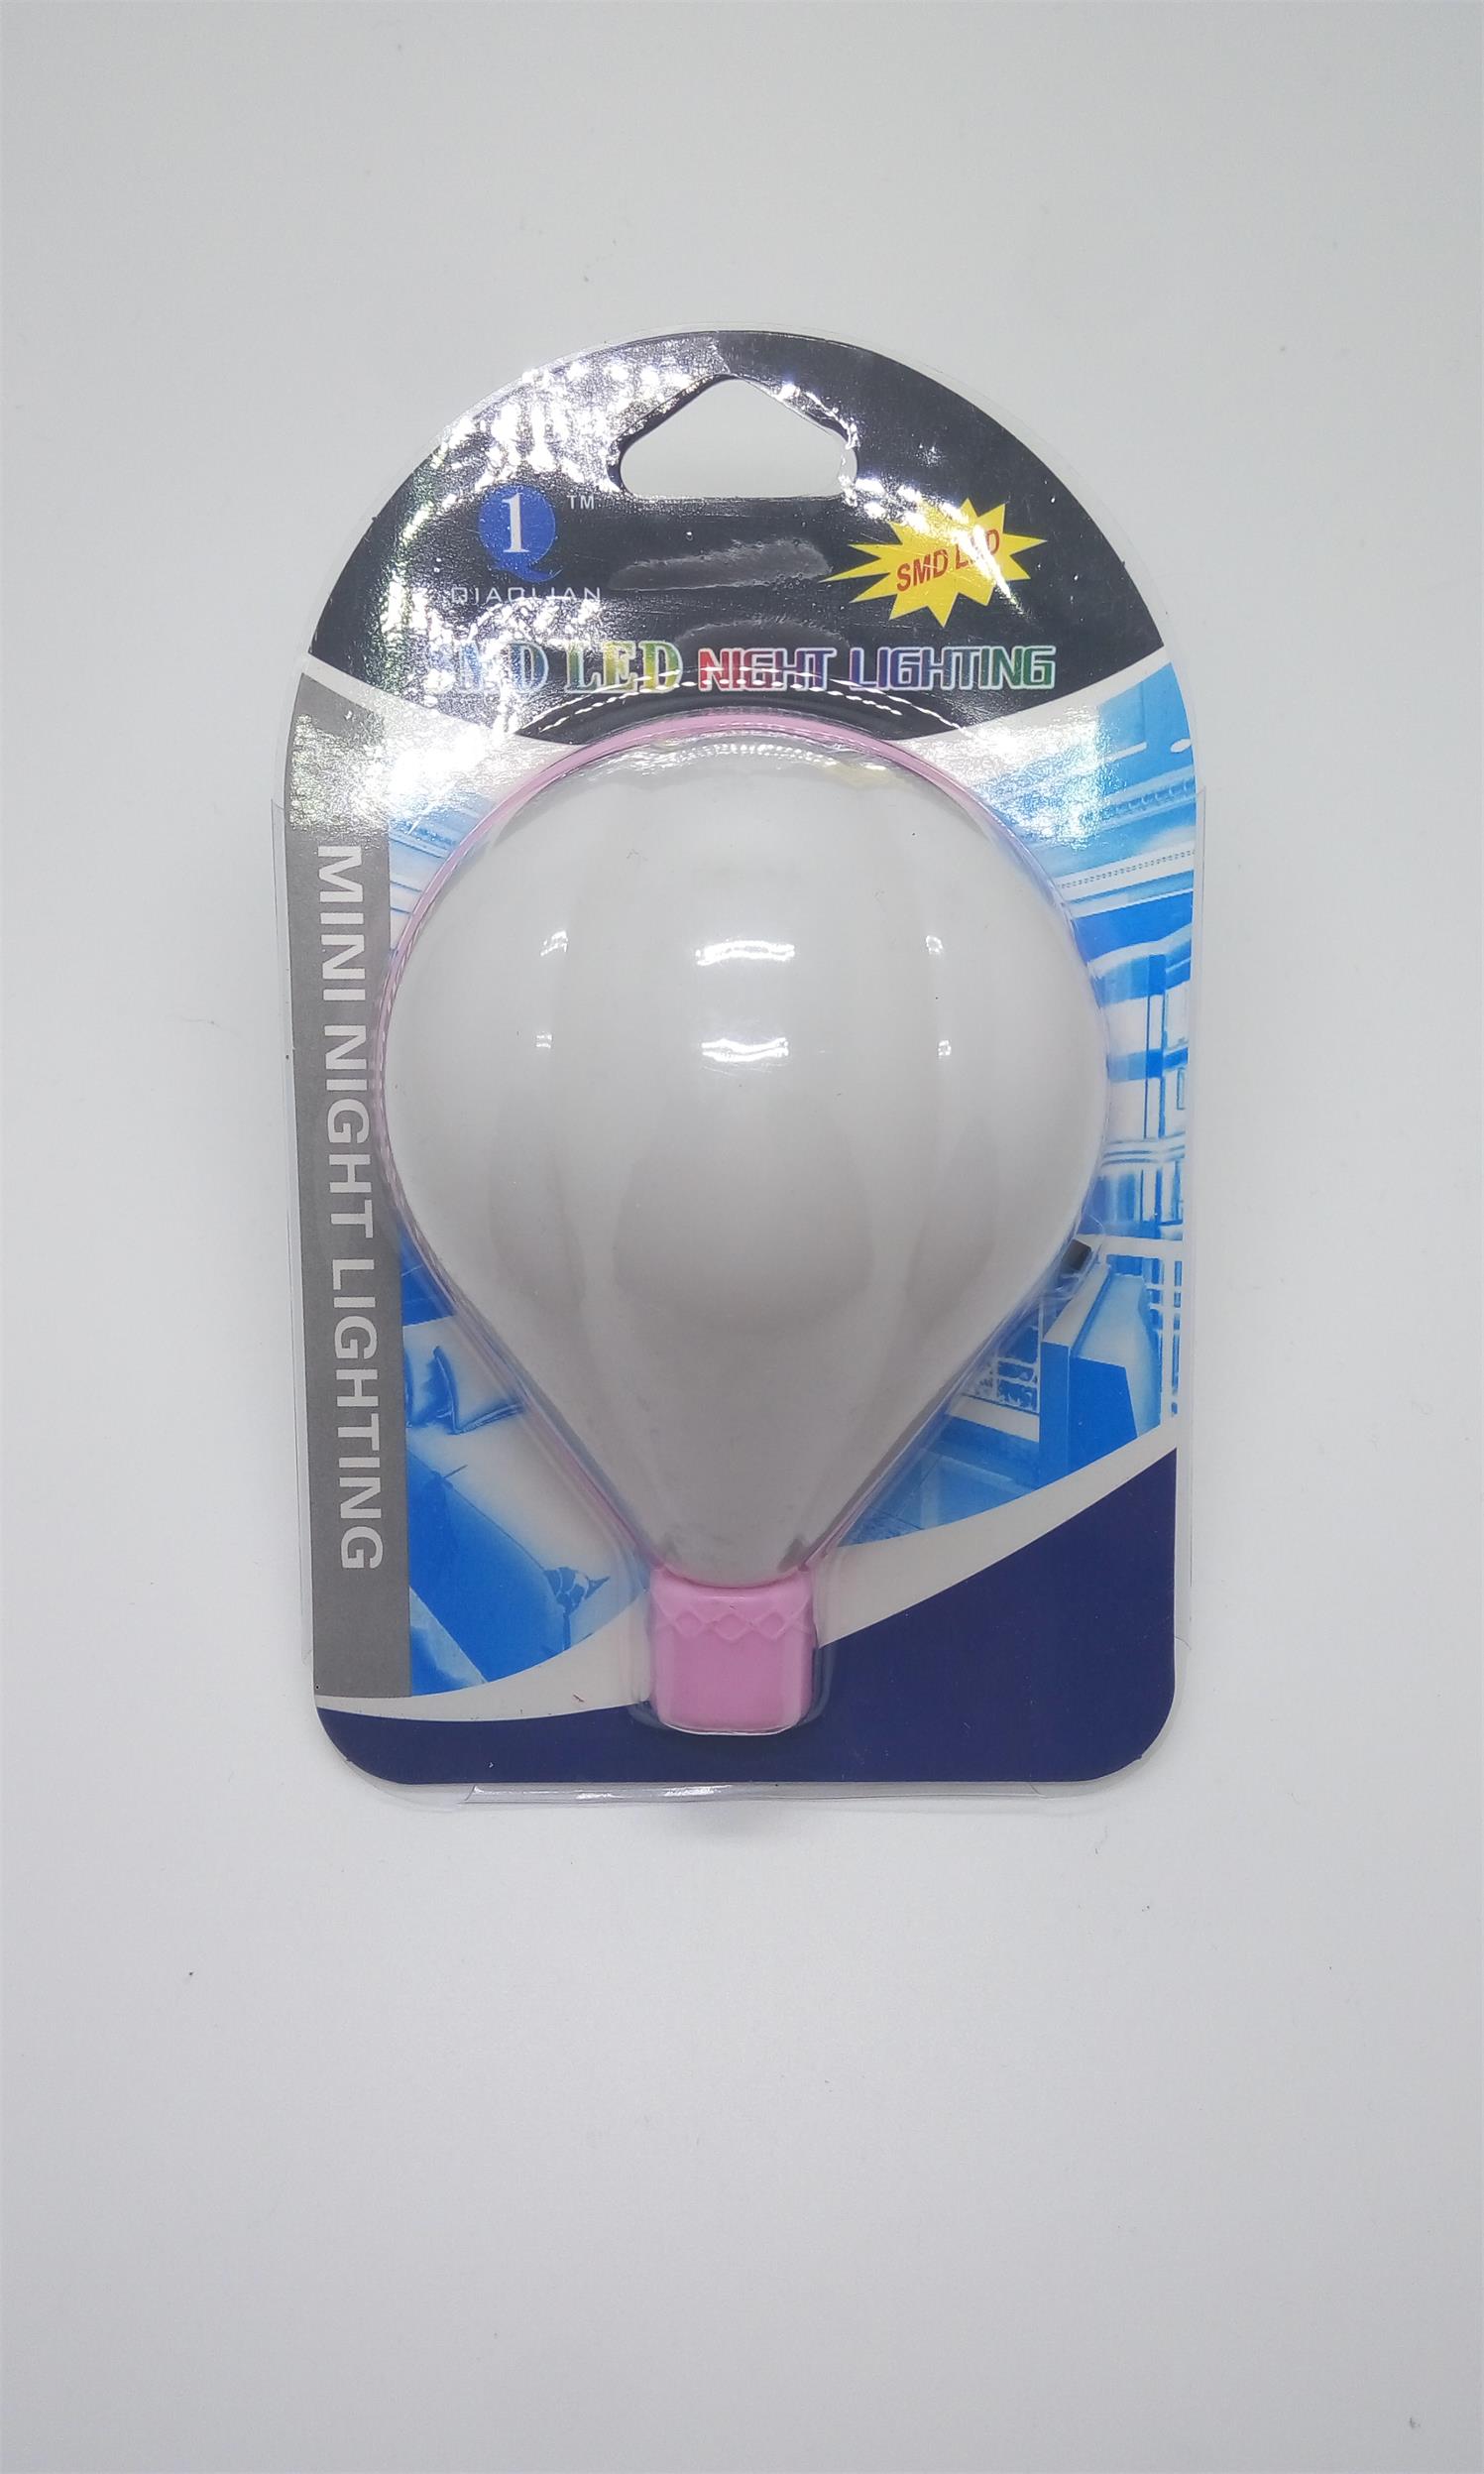 W043 Fire balloon shape 3 SMD mini switch plug in night light 0.6W AC 110V 220V